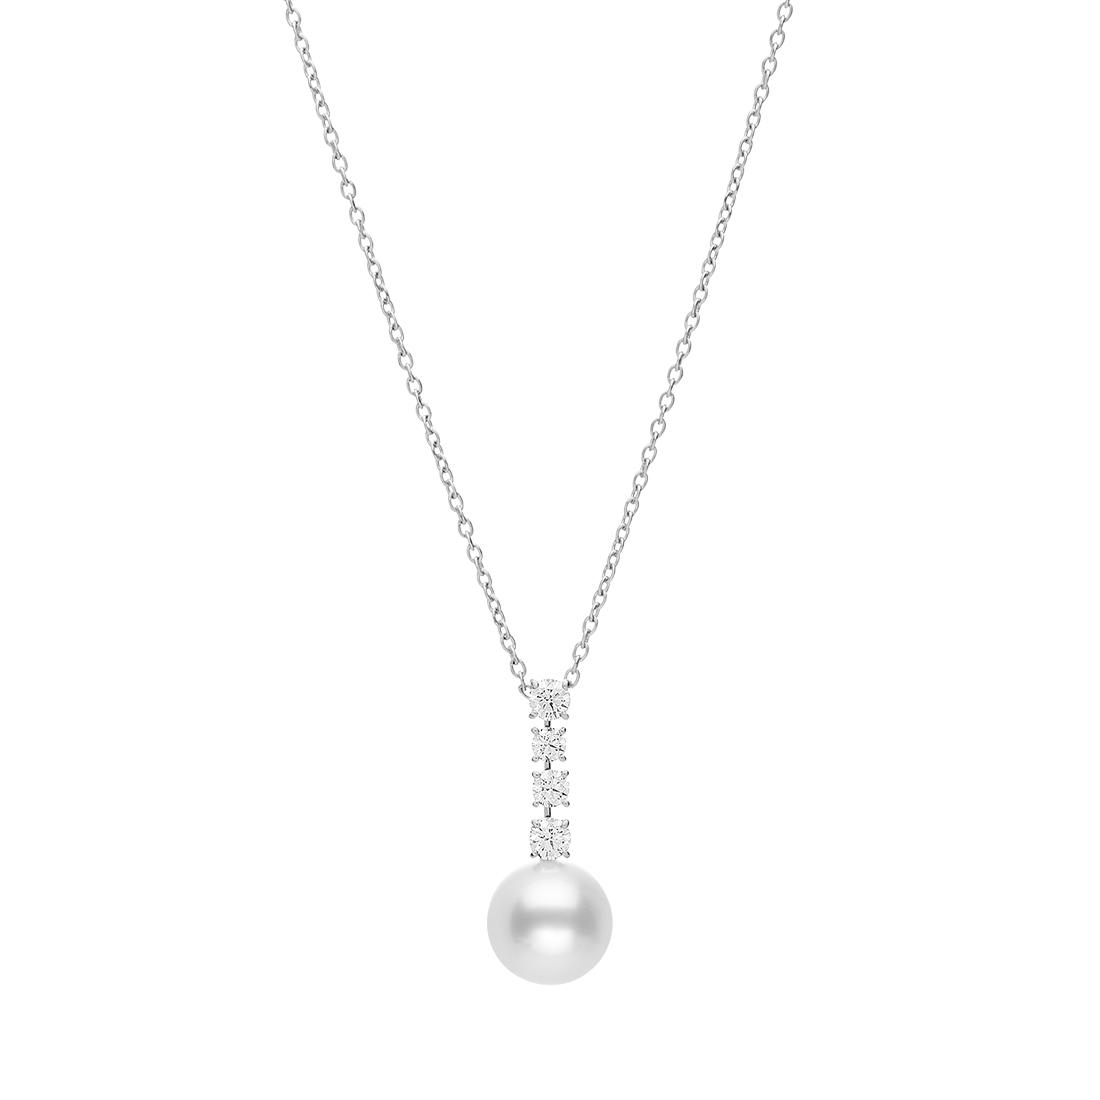 Mikimoto 12mm A White South Sea Pearl and Diamond Drop Pendant Necklace